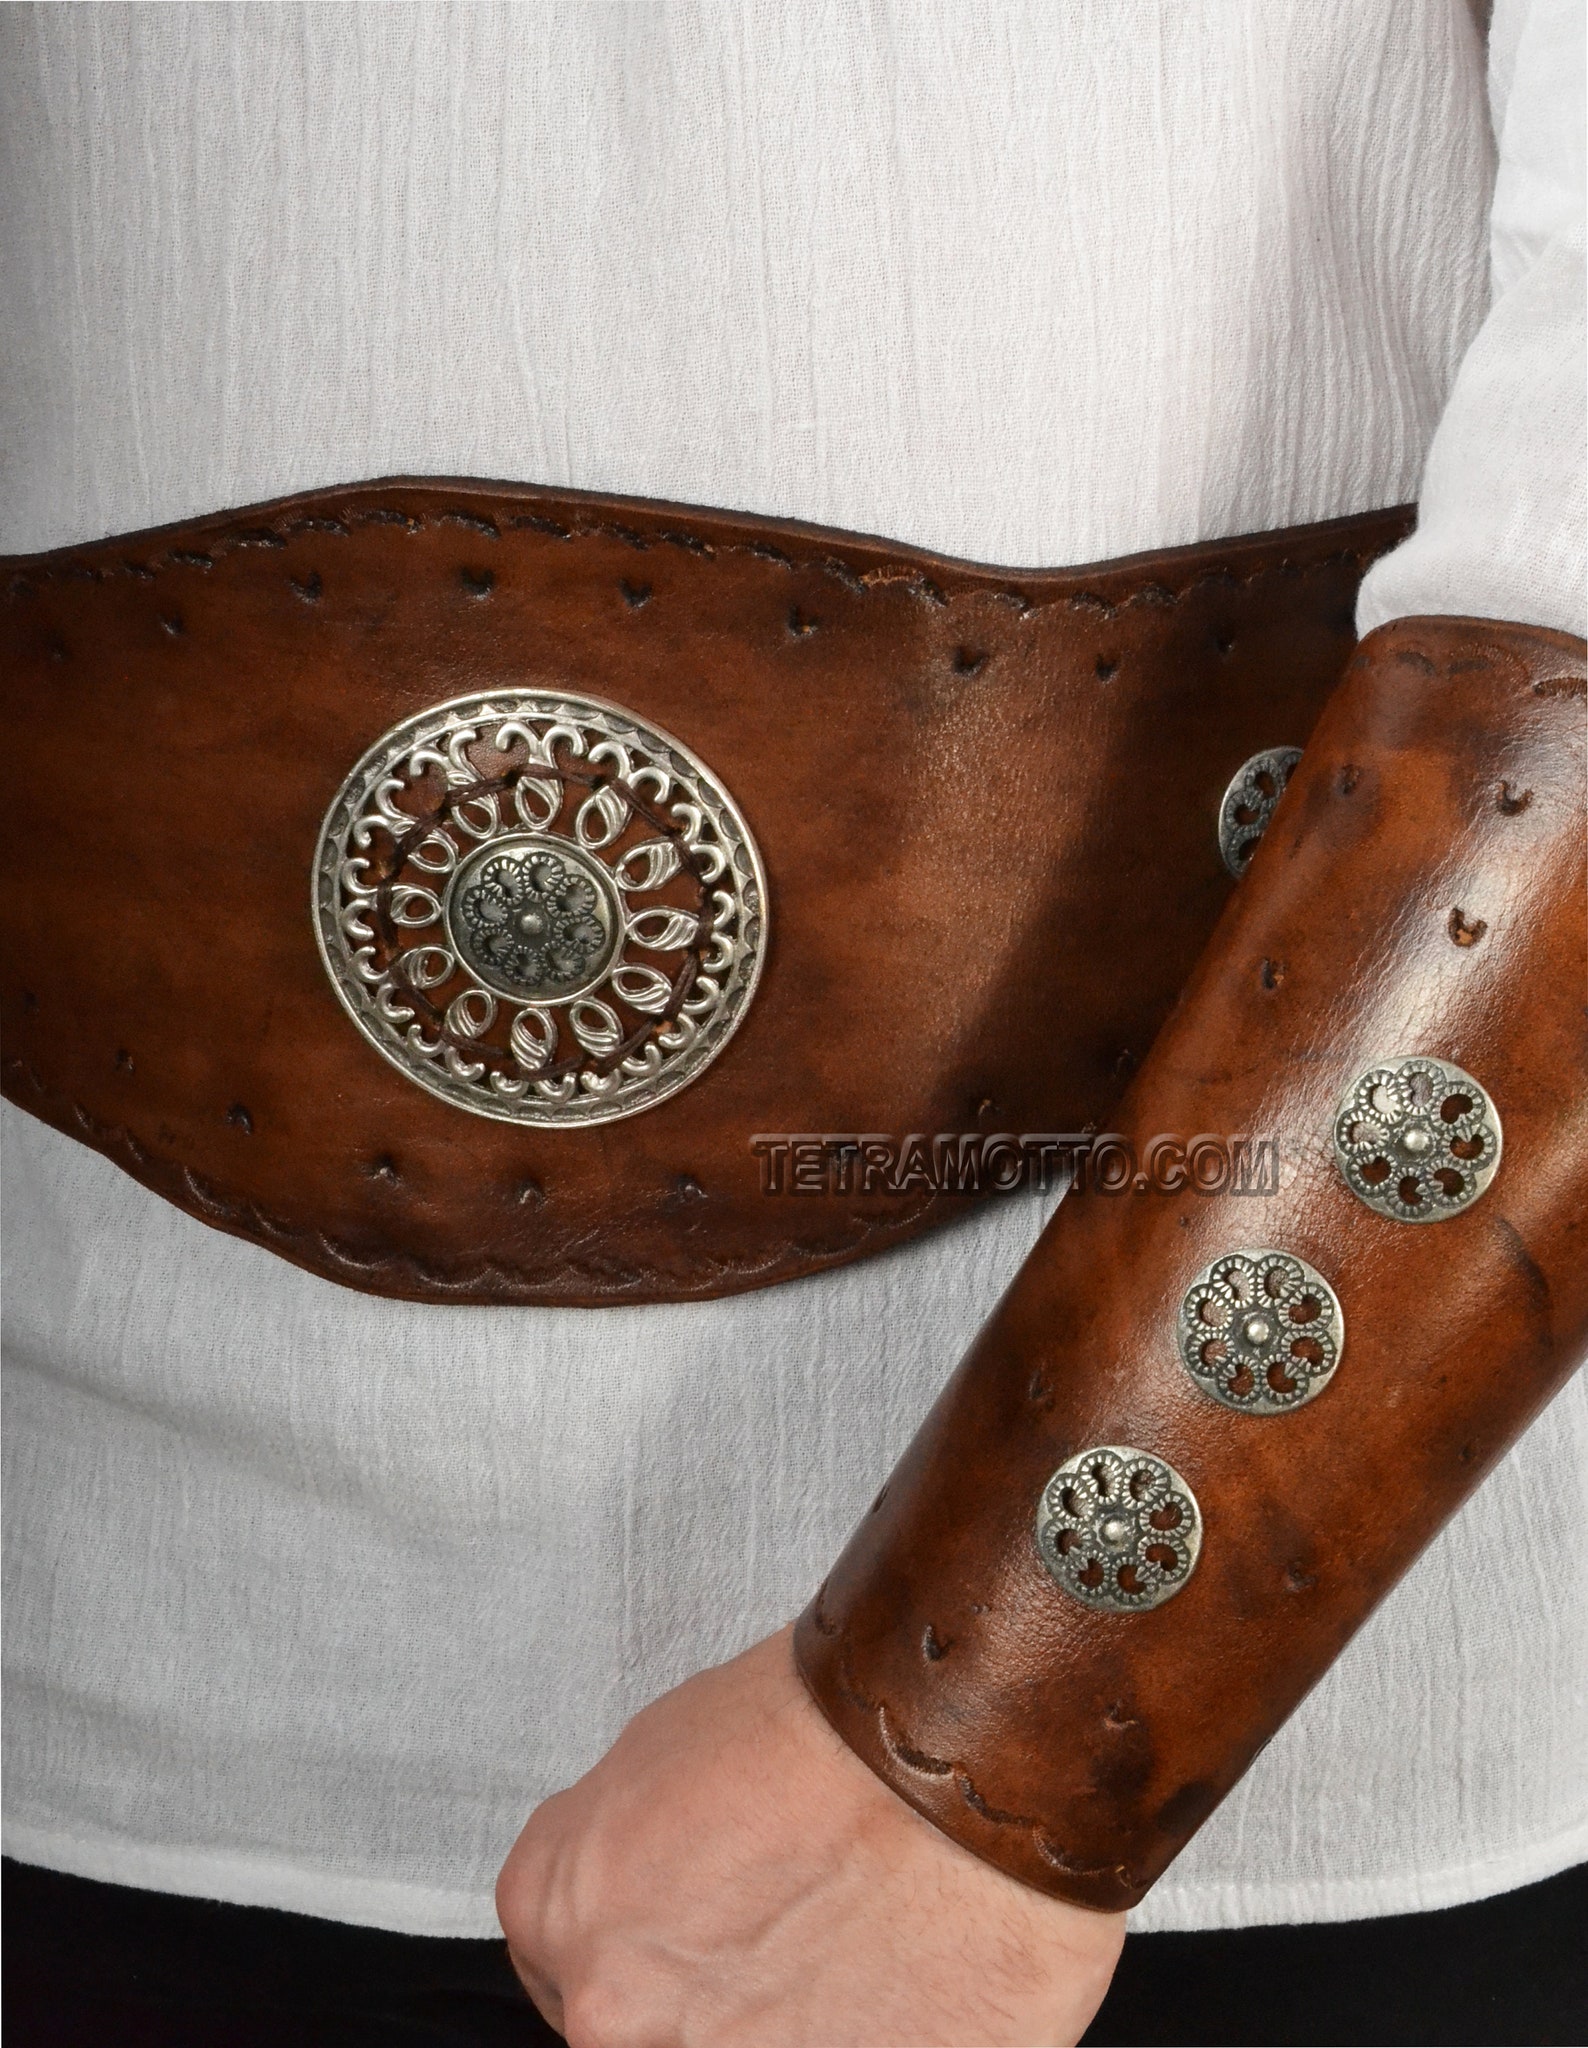 First Class Dirilis Ertugrul Waist Belt and Leather Wristband - Etsy